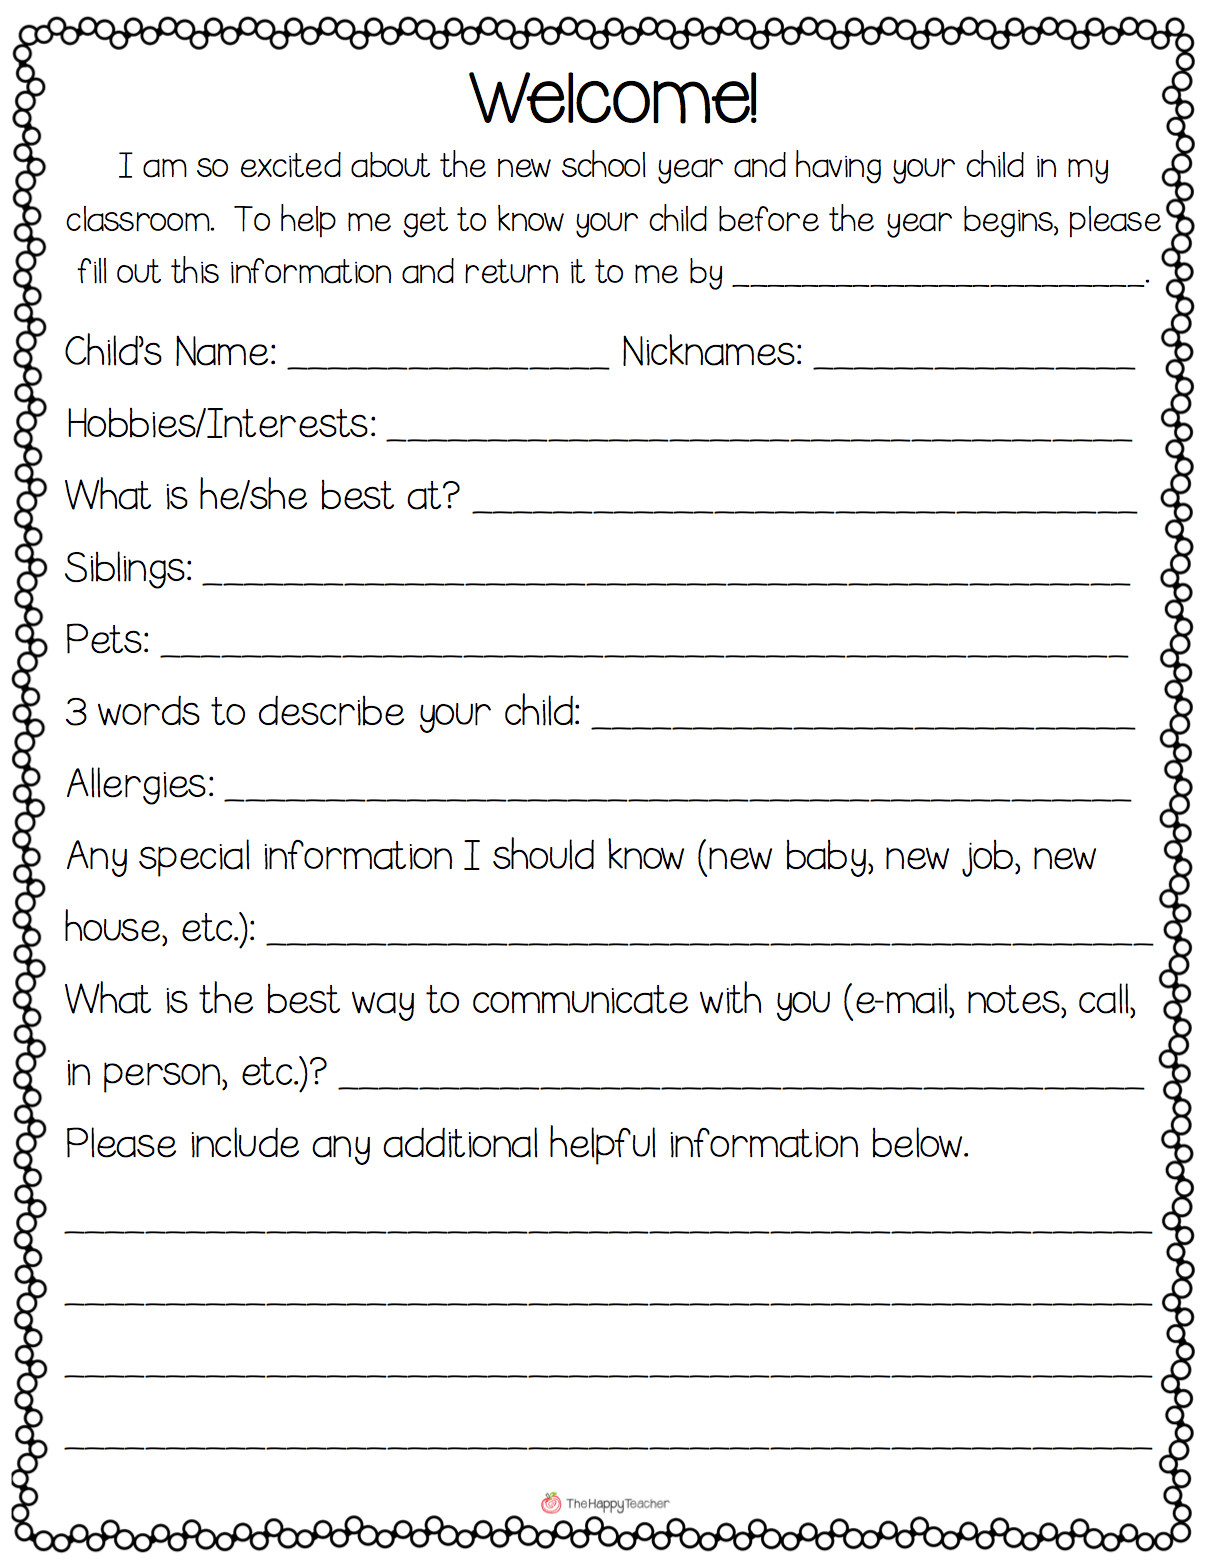 Letters to Parents Template Preschool Wel E Letter to Parents From Teacher Template